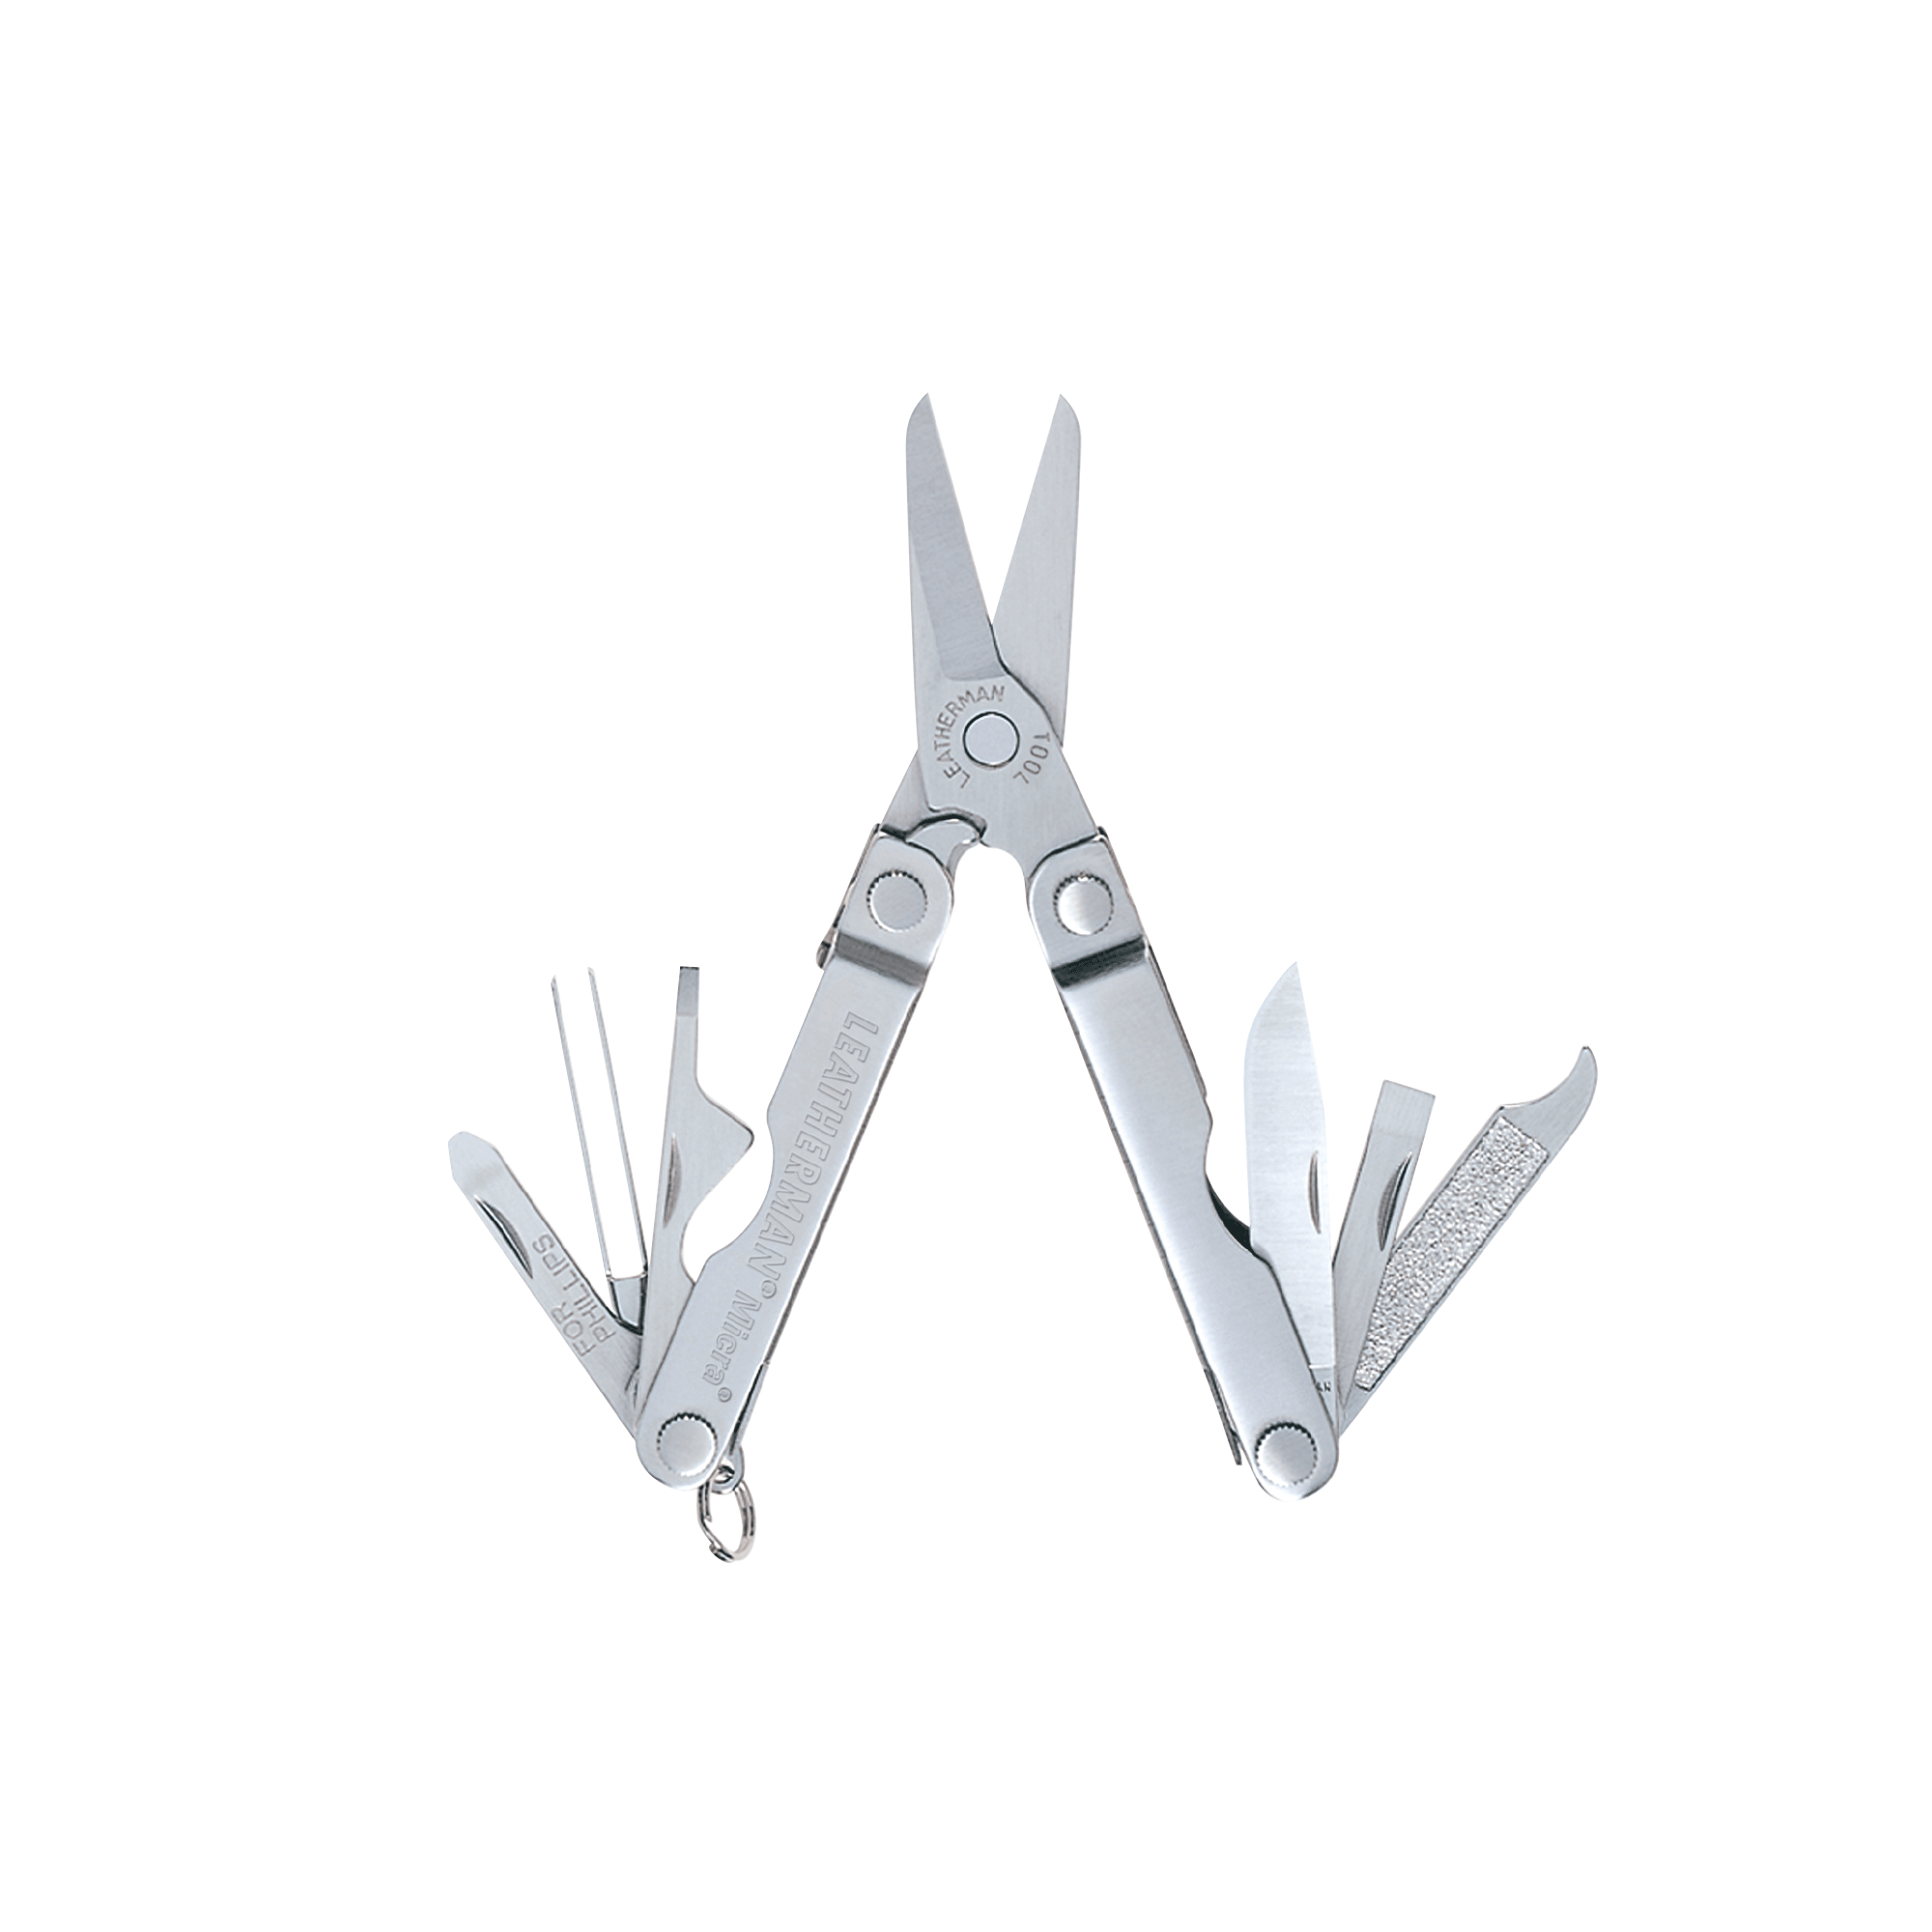 Leatherman Micra® Keychain Multi-Tool - Stainless Steel